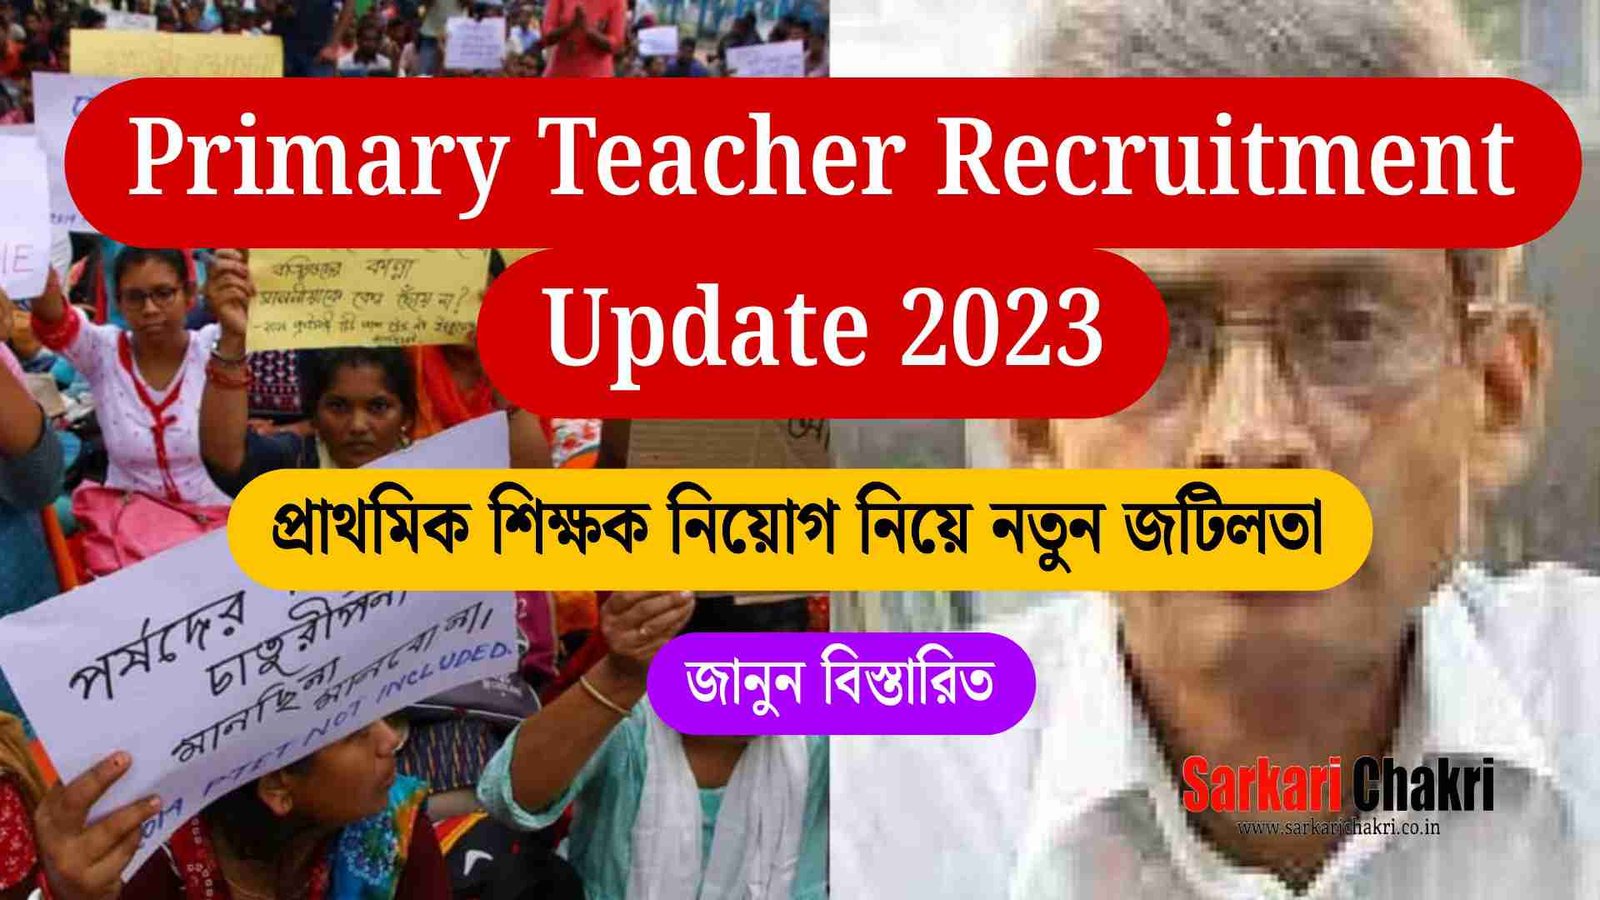 Primary Teacher Recruitment Update 2023